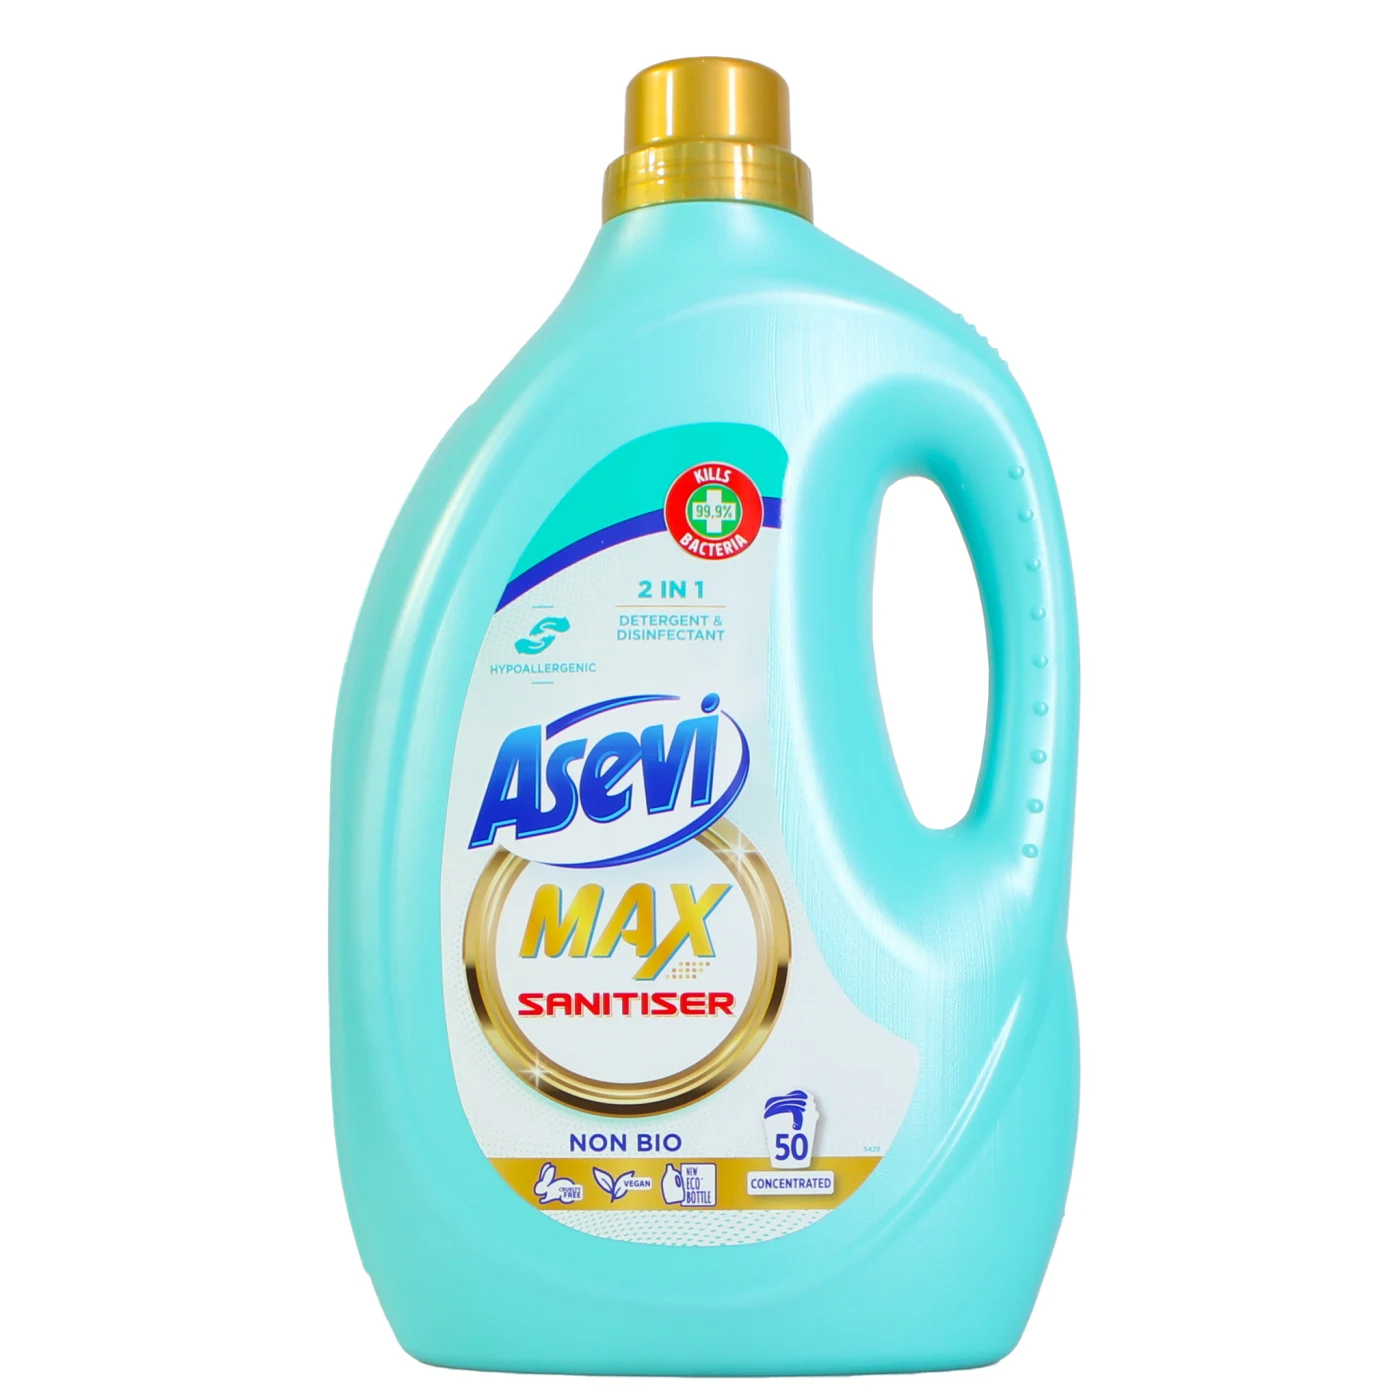 Asevi Max Sanitiser Detergent 2.5L, 50 WASH